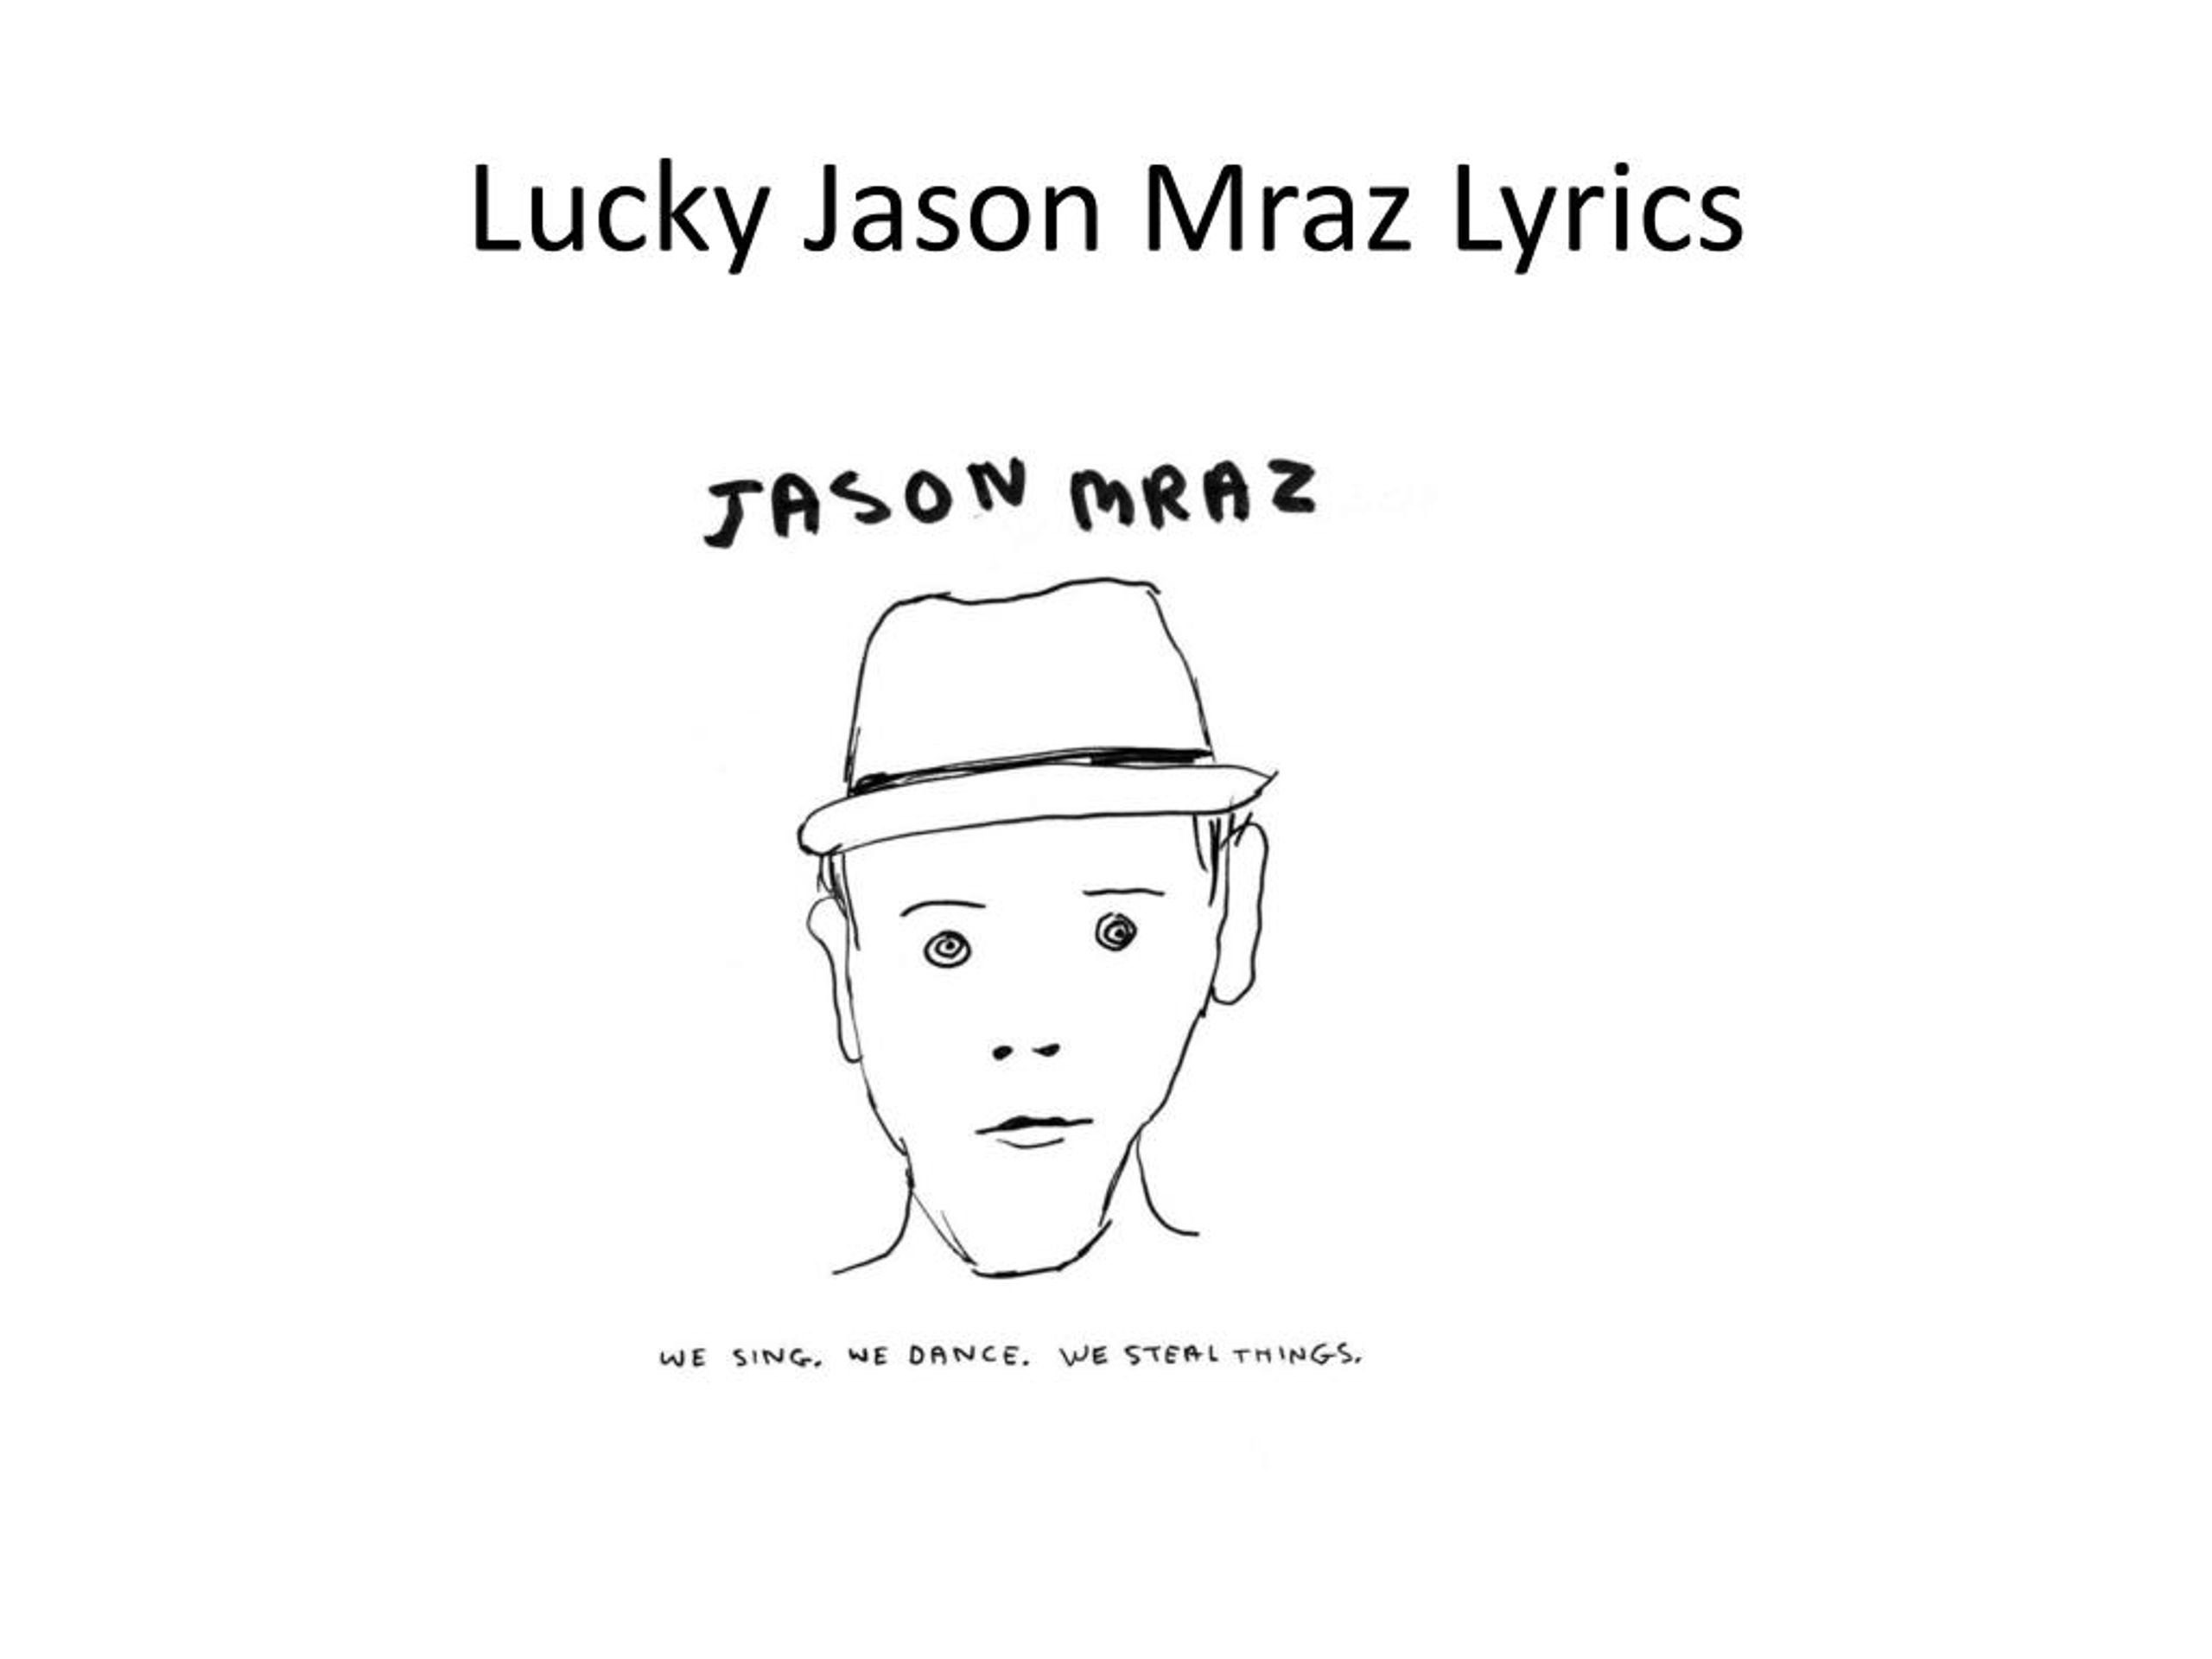 Jason Mraz & Colbie Caillat – Lucky Lyrics